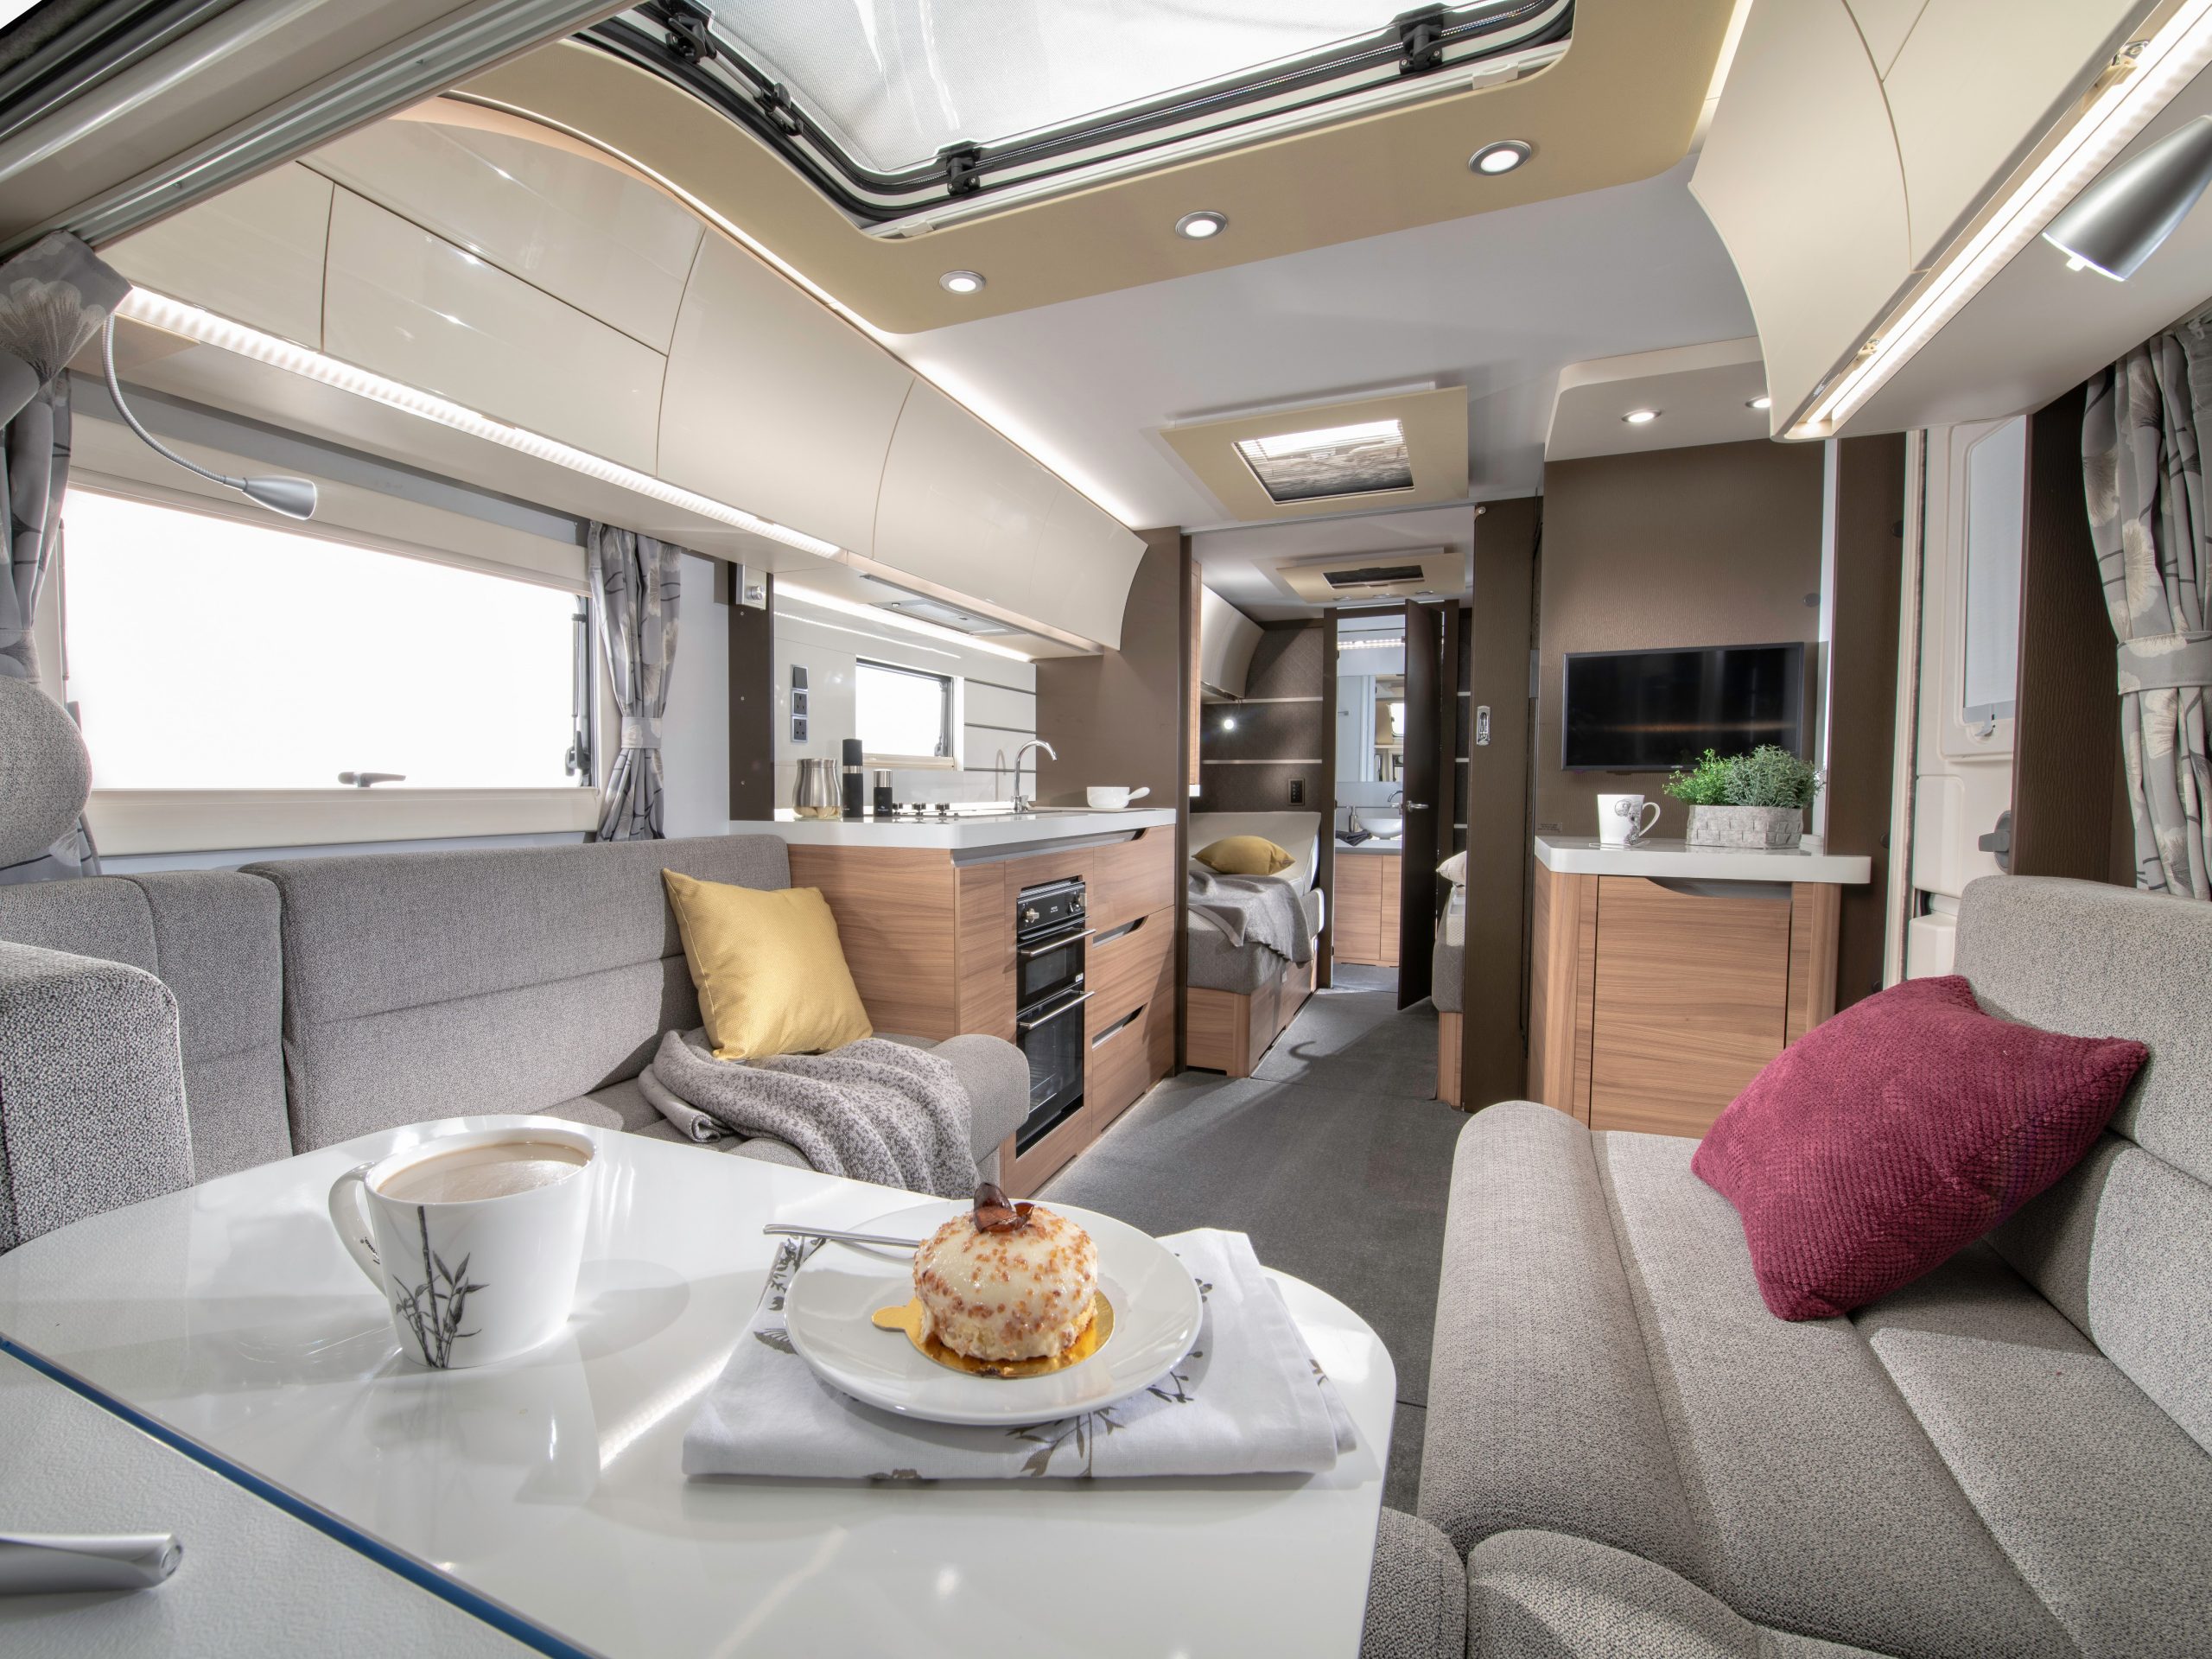 SPONSORED: Tour in complete luxury in the 2020 Adria Alpina ...